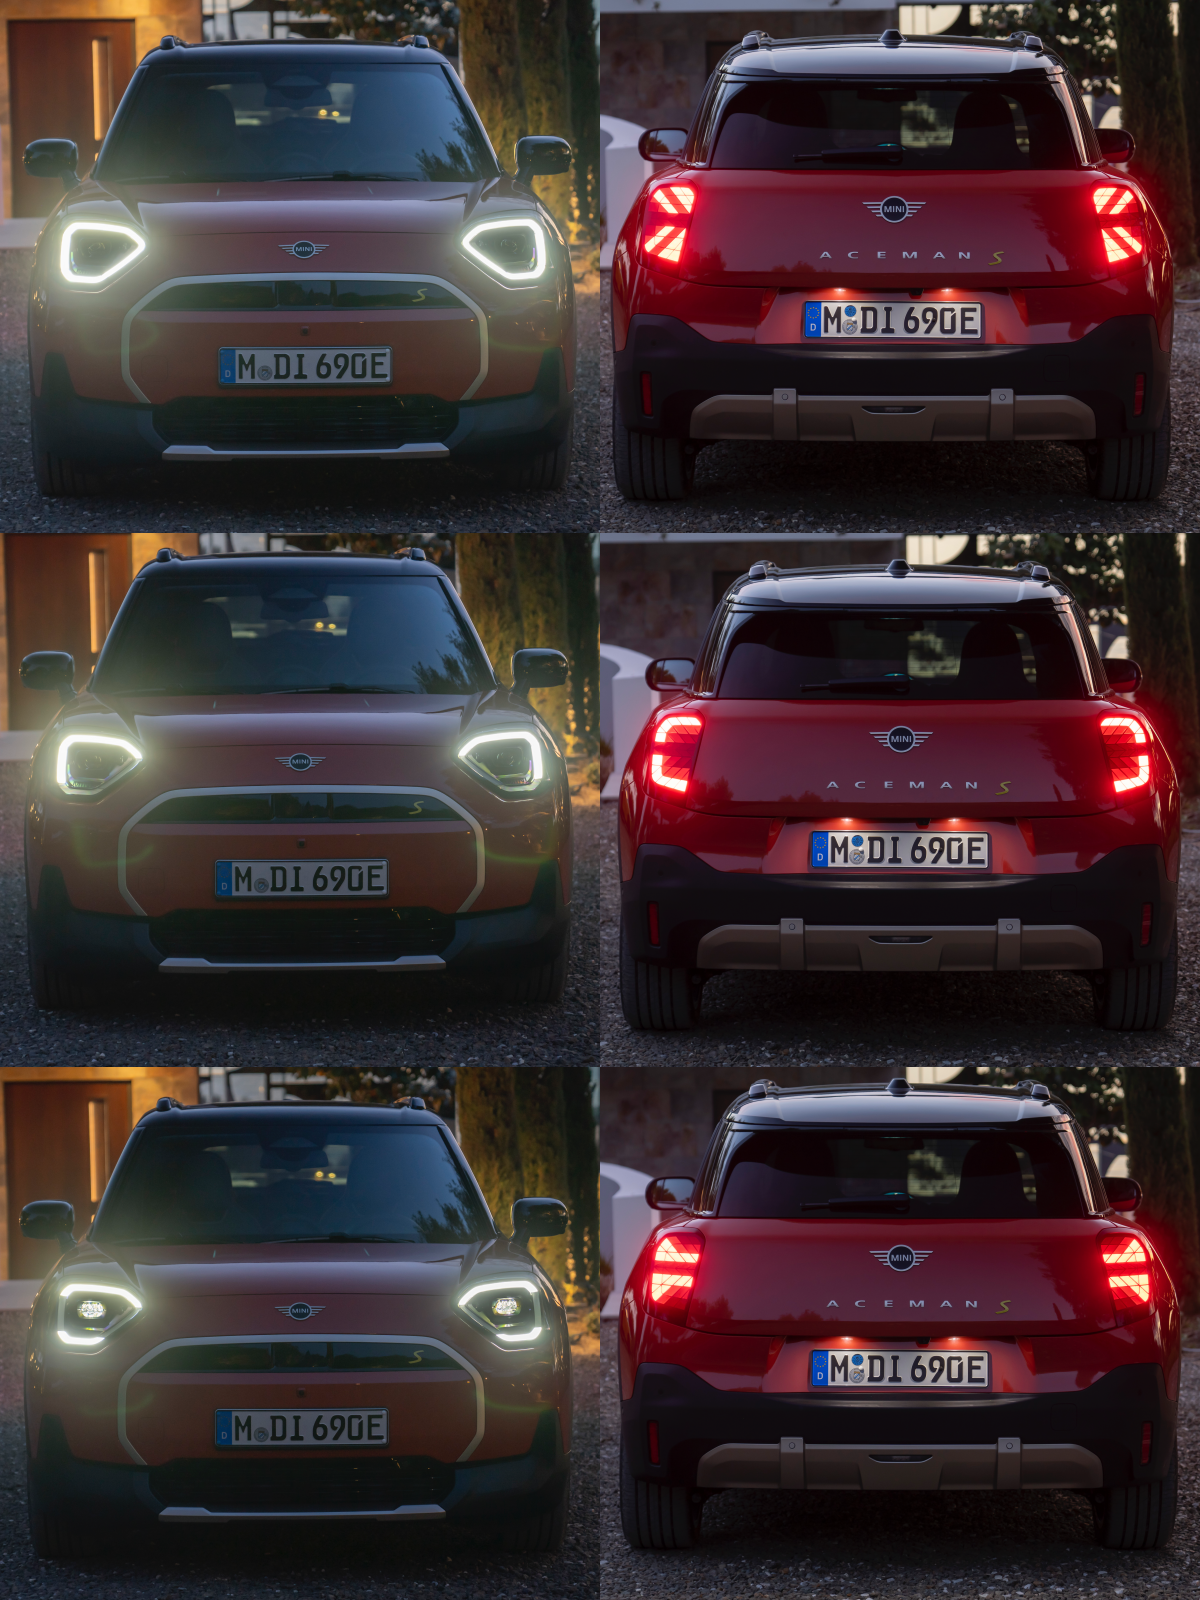 'LED' 점등된 미니 에이스맨 차량 이미지이다.